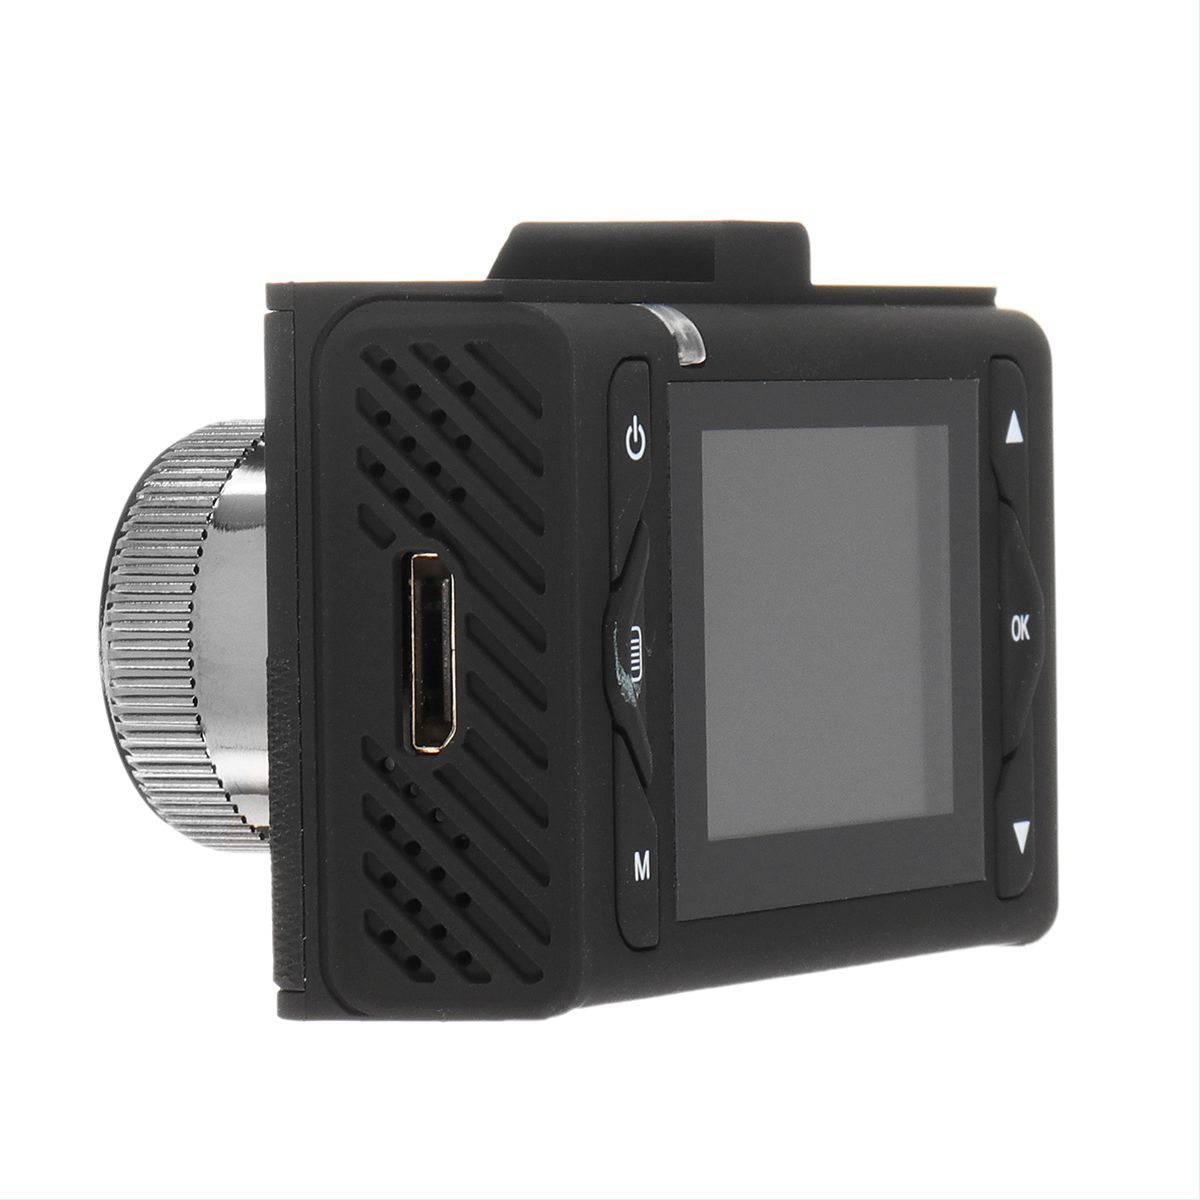 W65-15-Inch-LCD-Screen-1080-Full-HD-Mini-USB-Hidden-WDR-G-sensor-Car-DVR-170-Degree-Wide-Angle-1330630